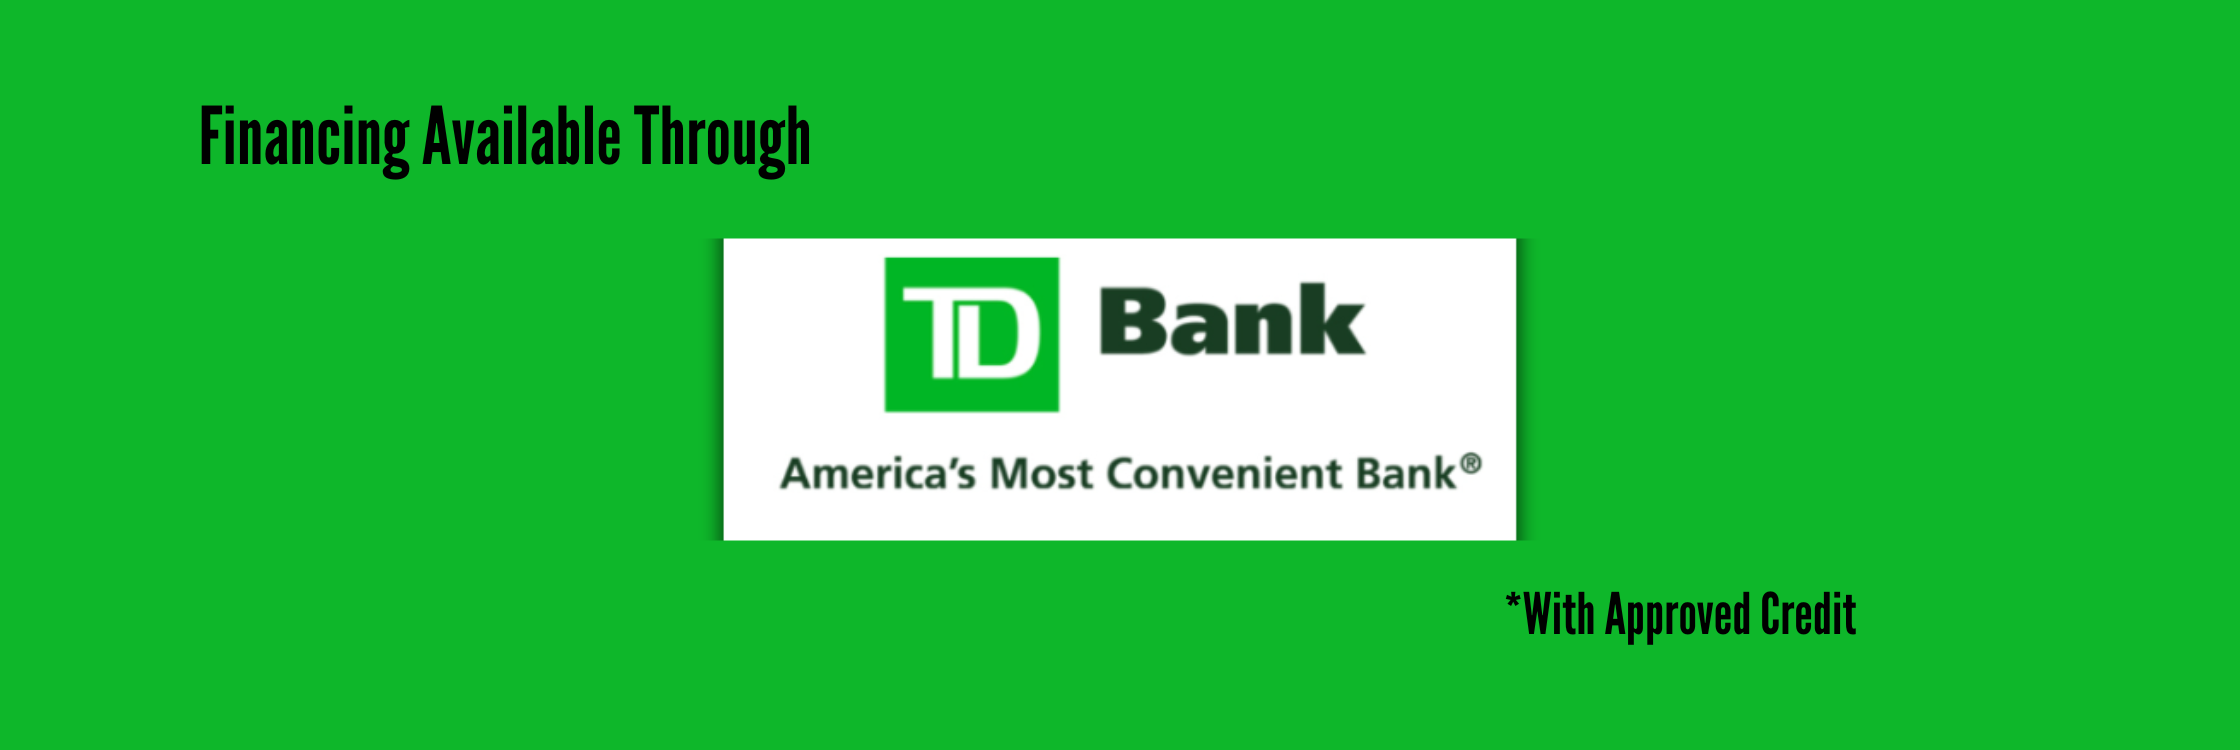 TD Bank Banner(7)